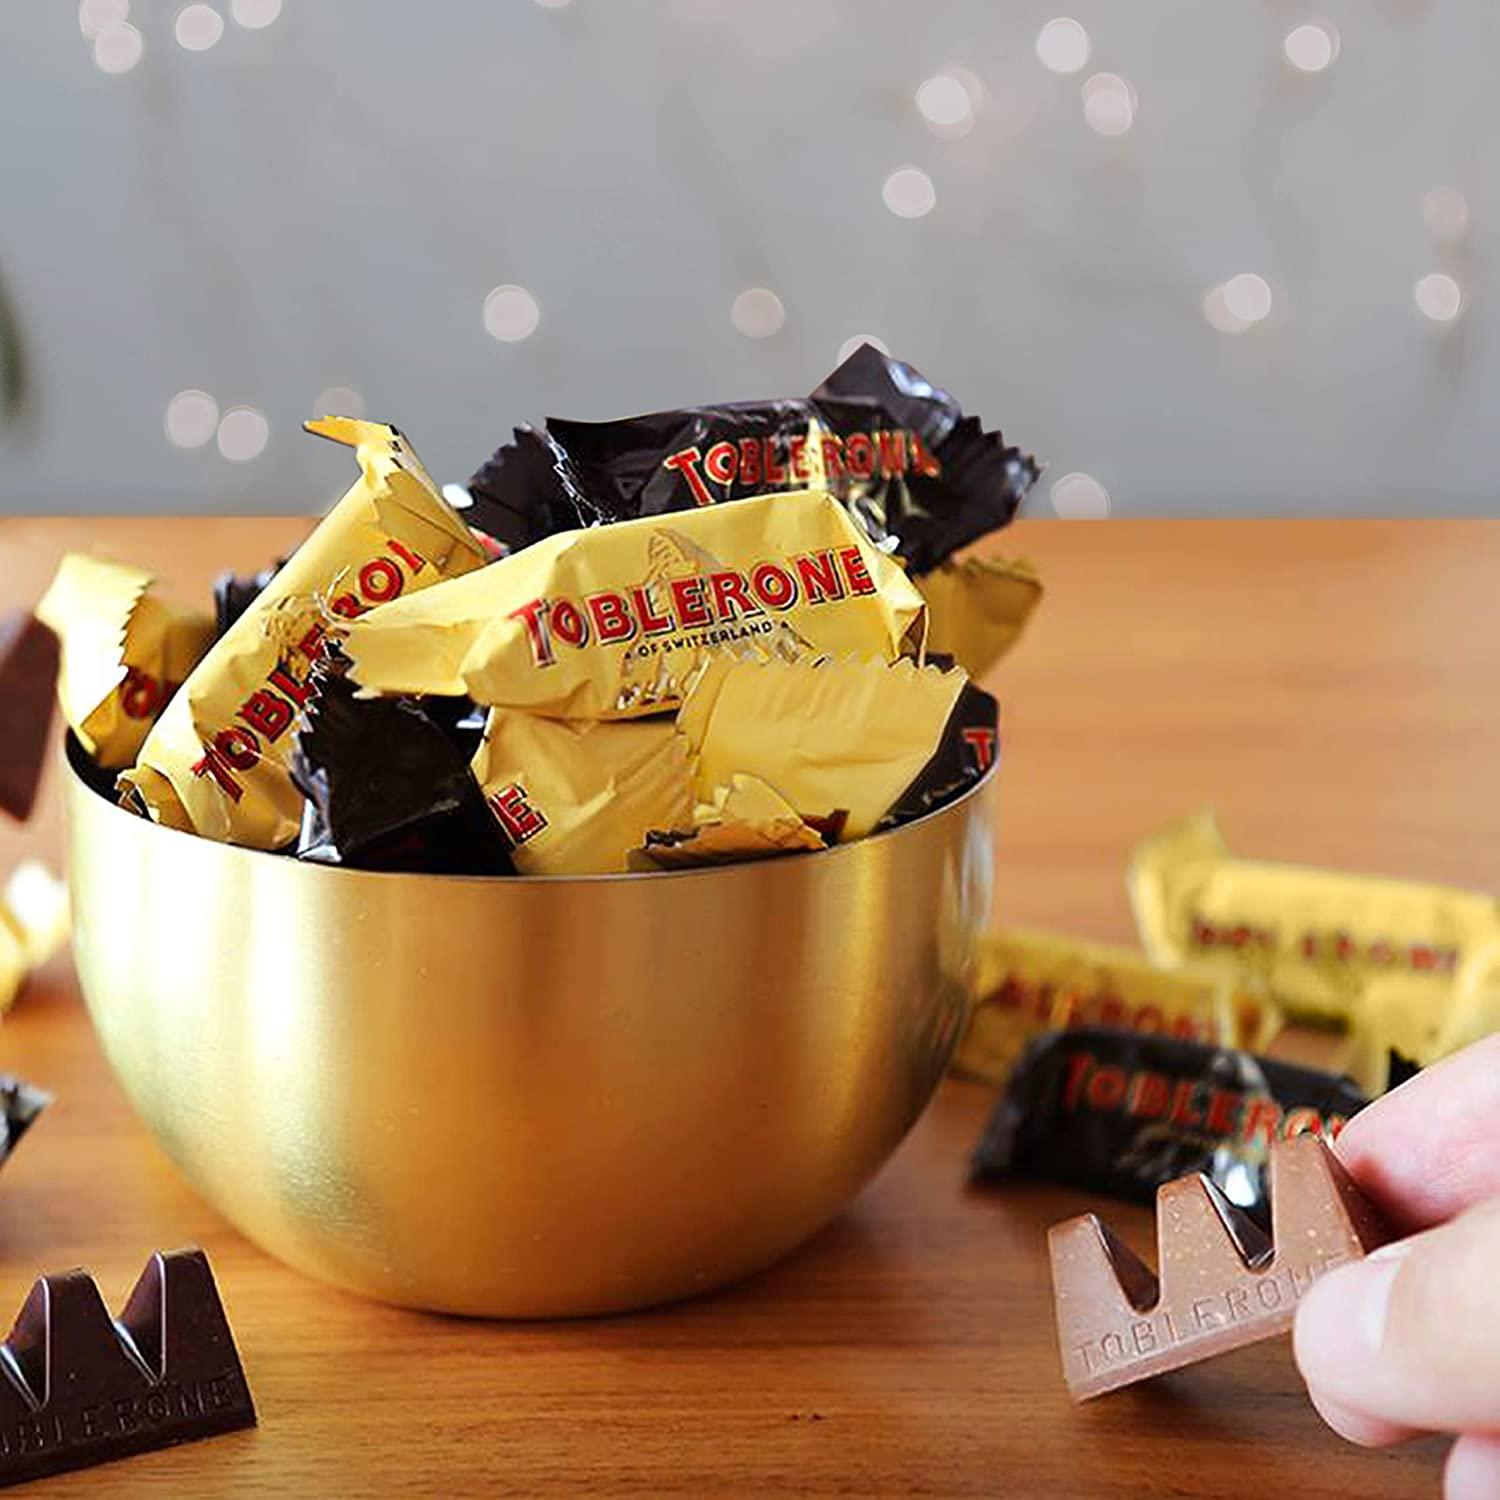 Toblerone Dark Chocolate Minis: 7-Ounce Bag